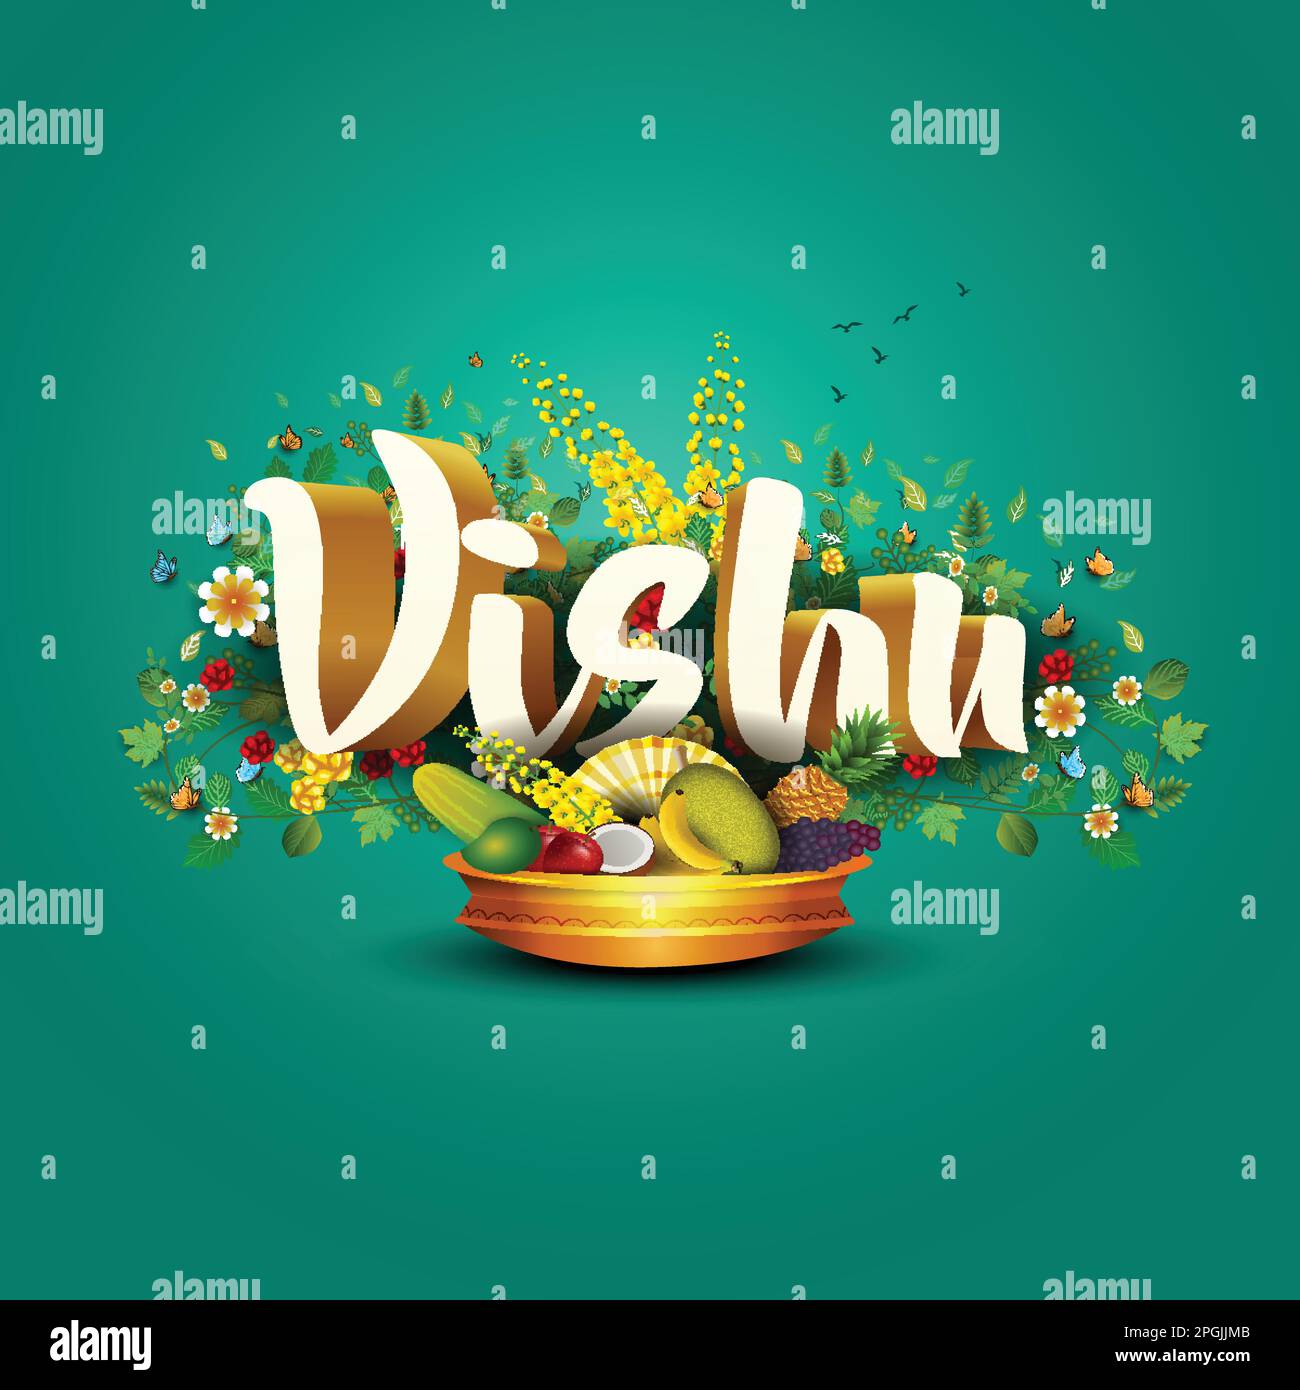 Kerala festival happy vishu greetings. abstract vector illustration design. Stock Vector